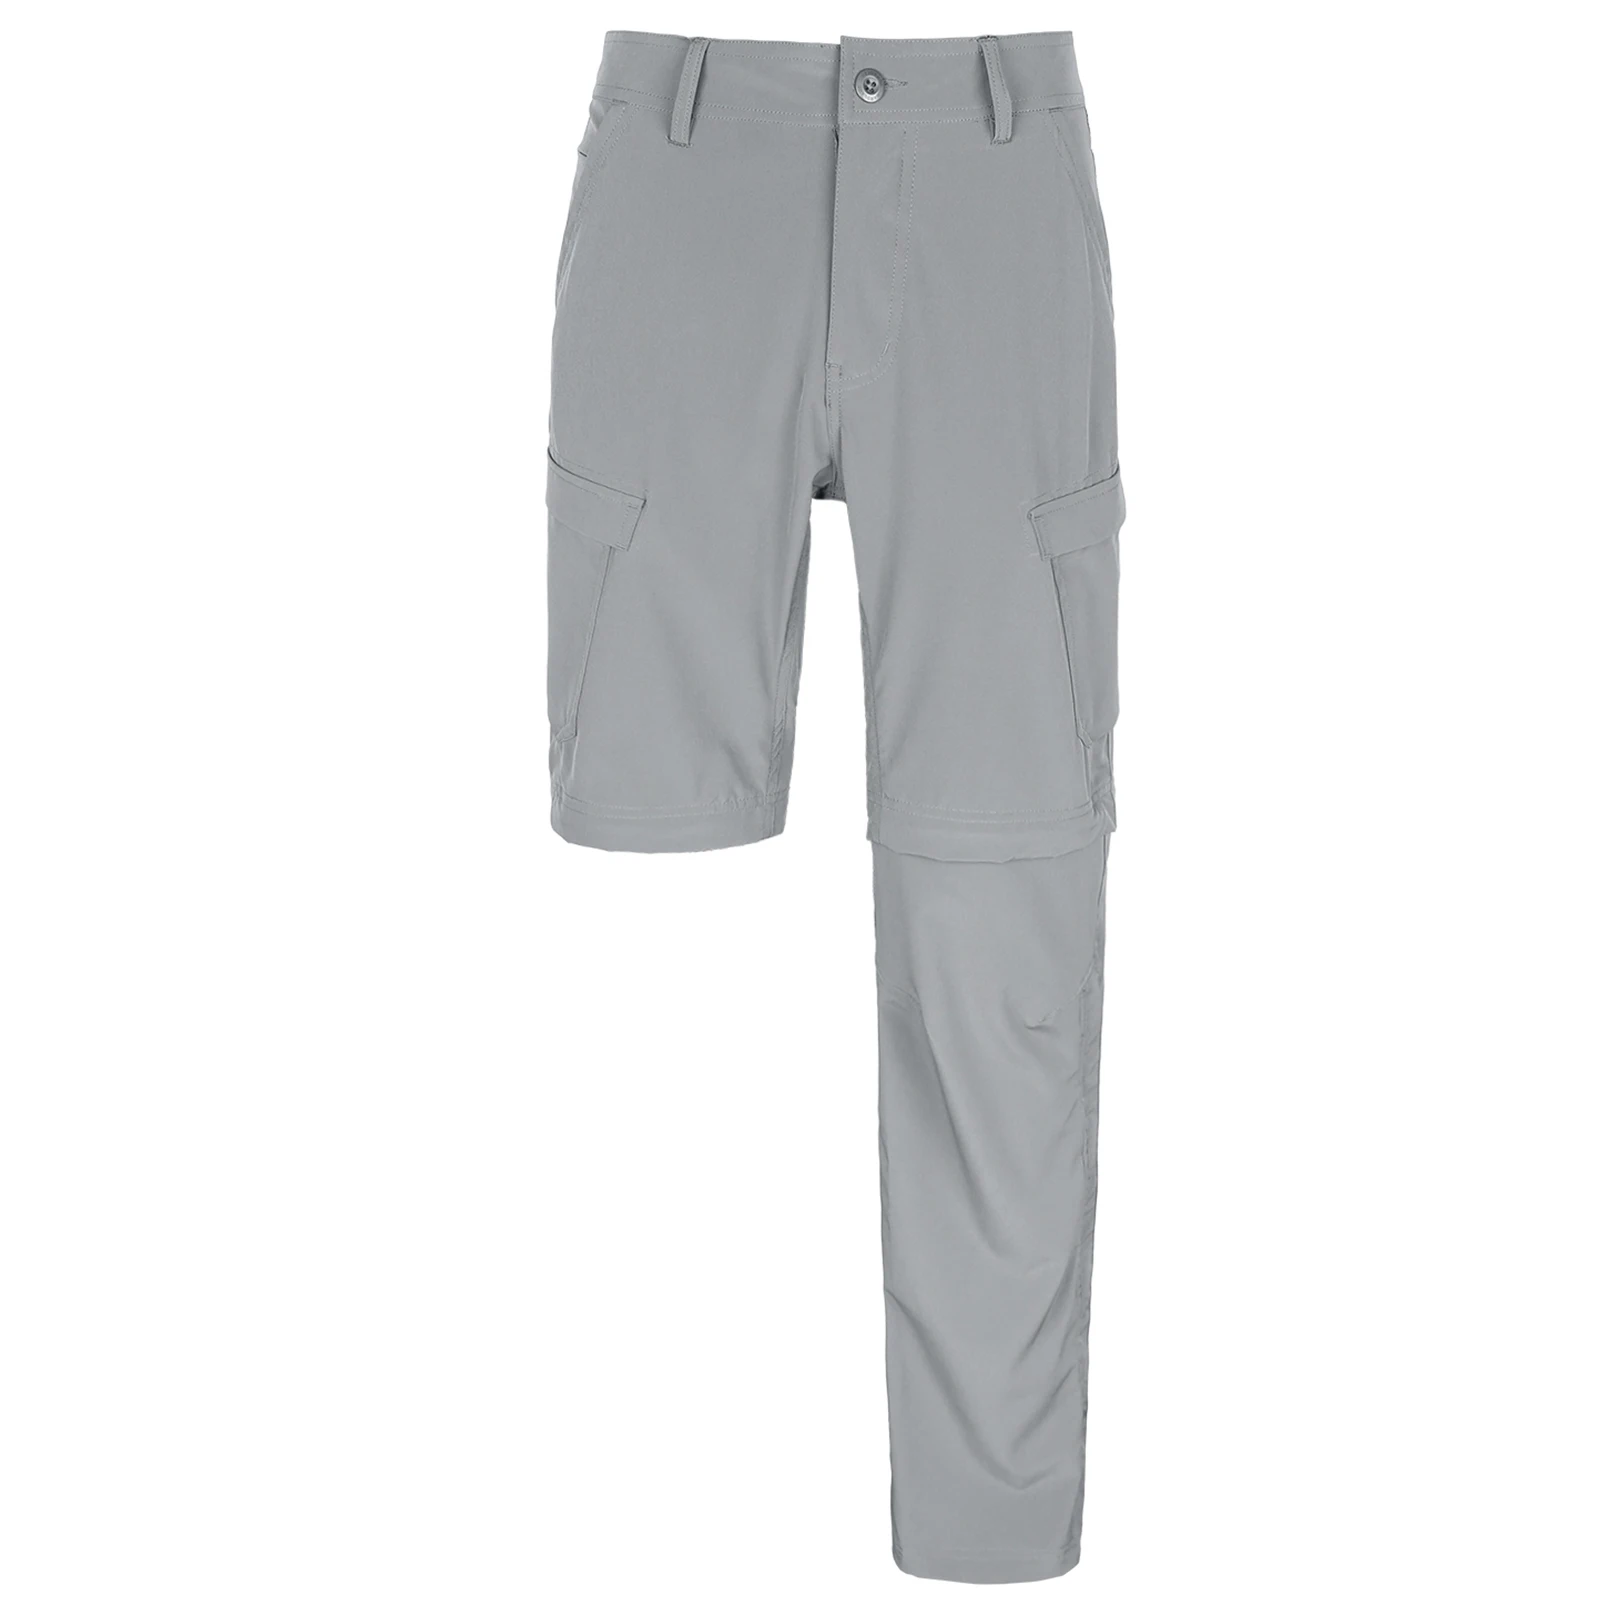 Men's Lightweight Cargo Pants HARD LAND Detachable Leg Pants Shorts Adjustable Leg Comfortable and Breathable Multi Pocket